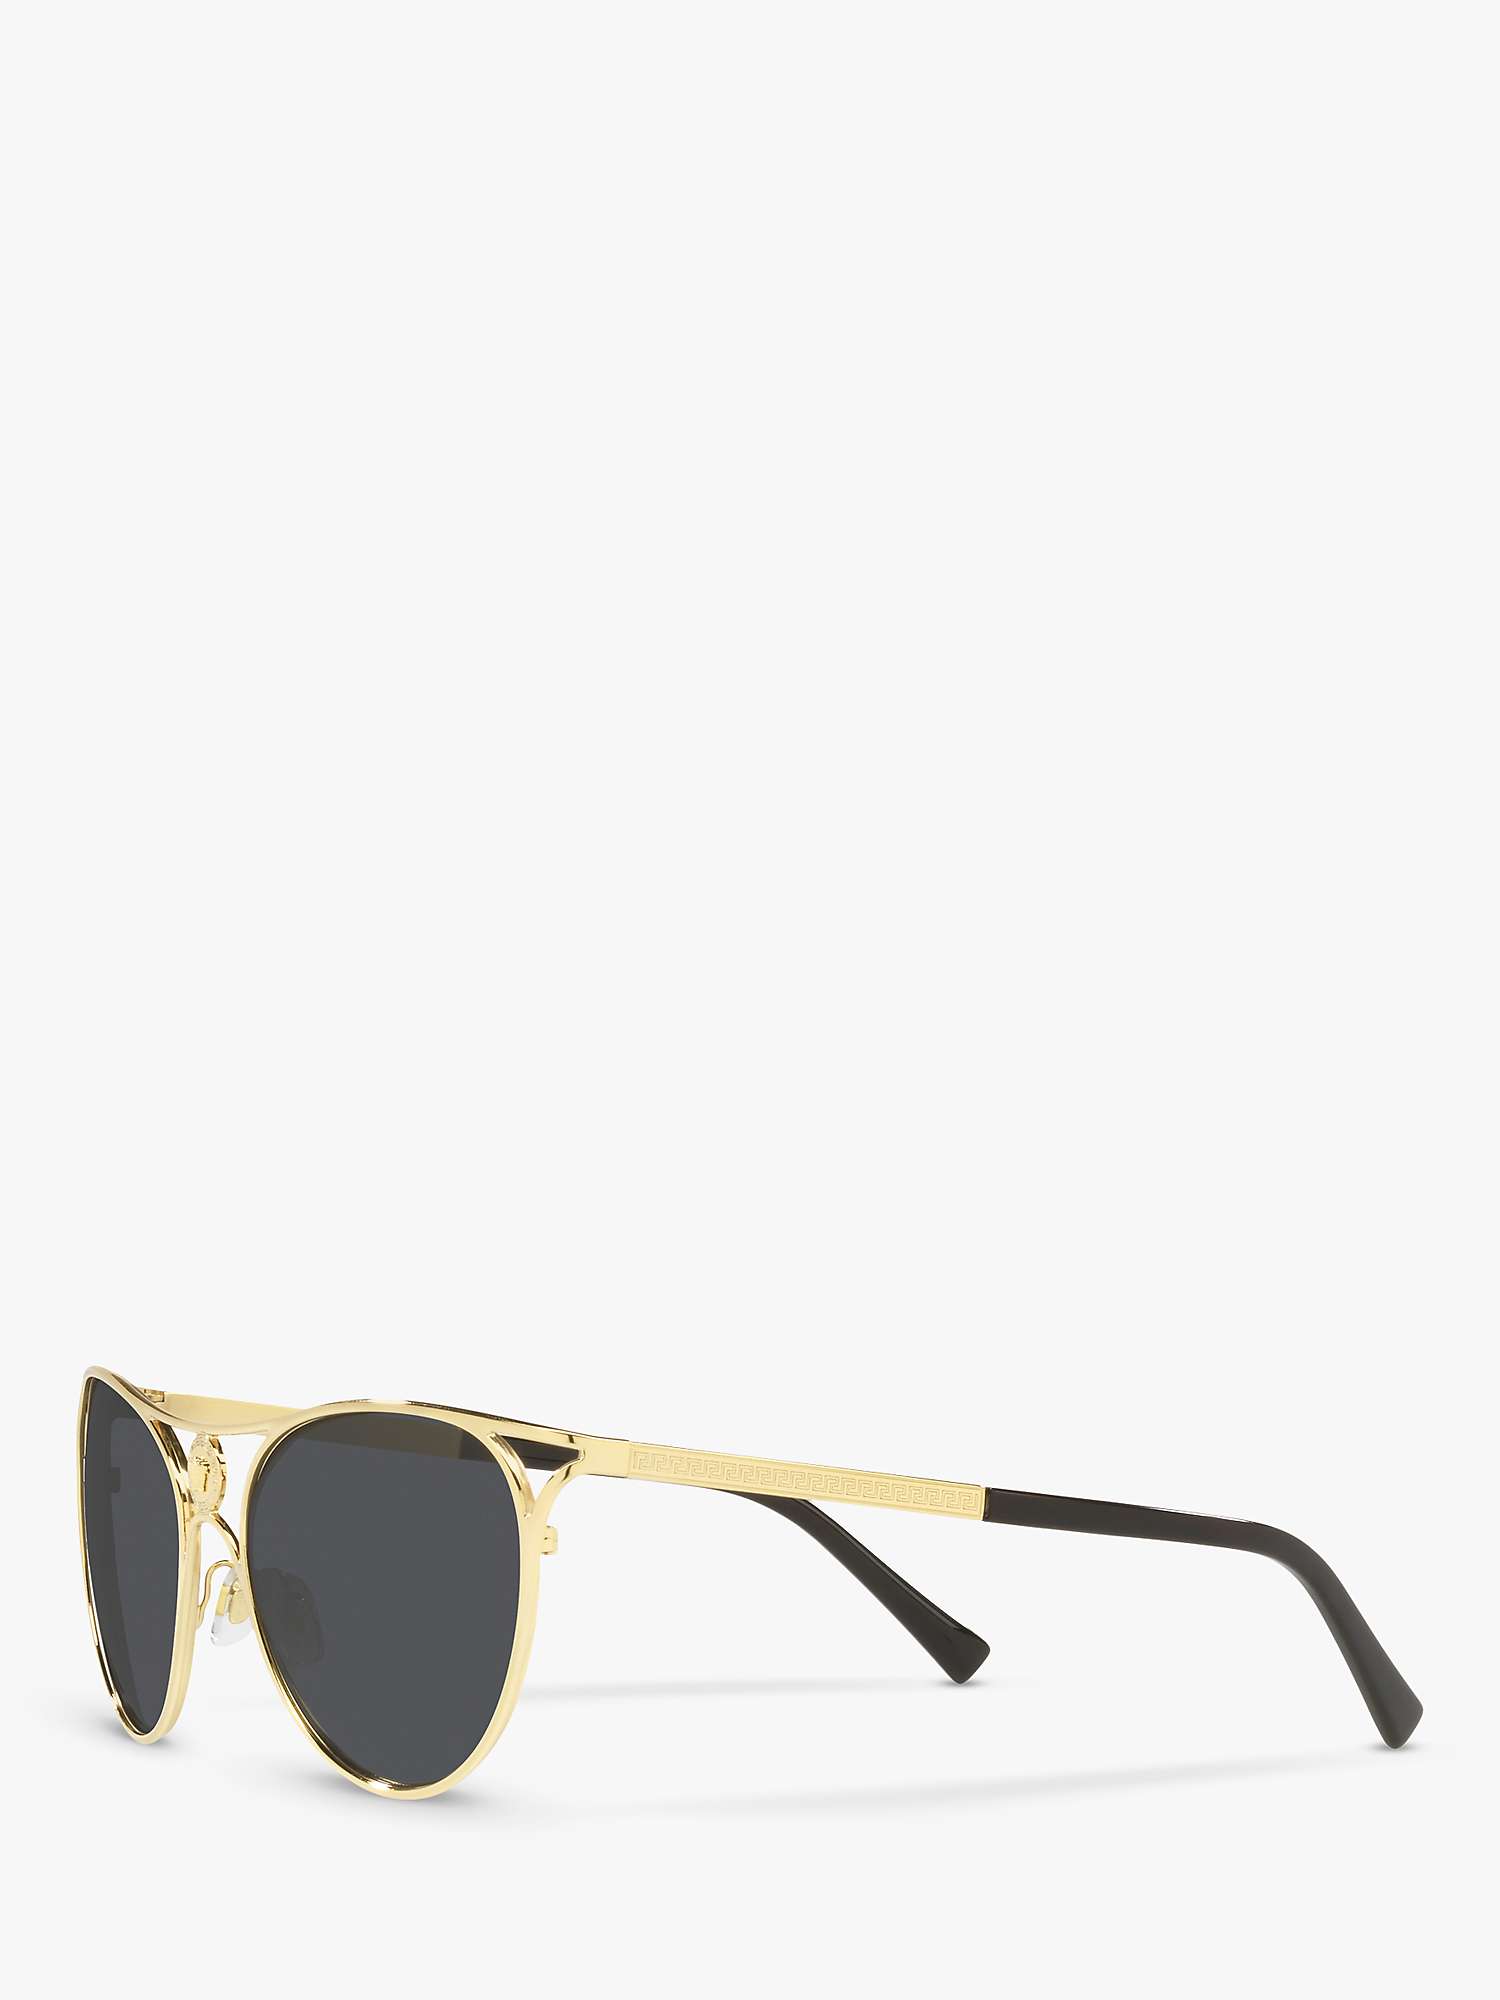 Buy Versace VE2237 Women's Cat's Eye Sunglasses, Gold/Grey Online at johnlewis.com